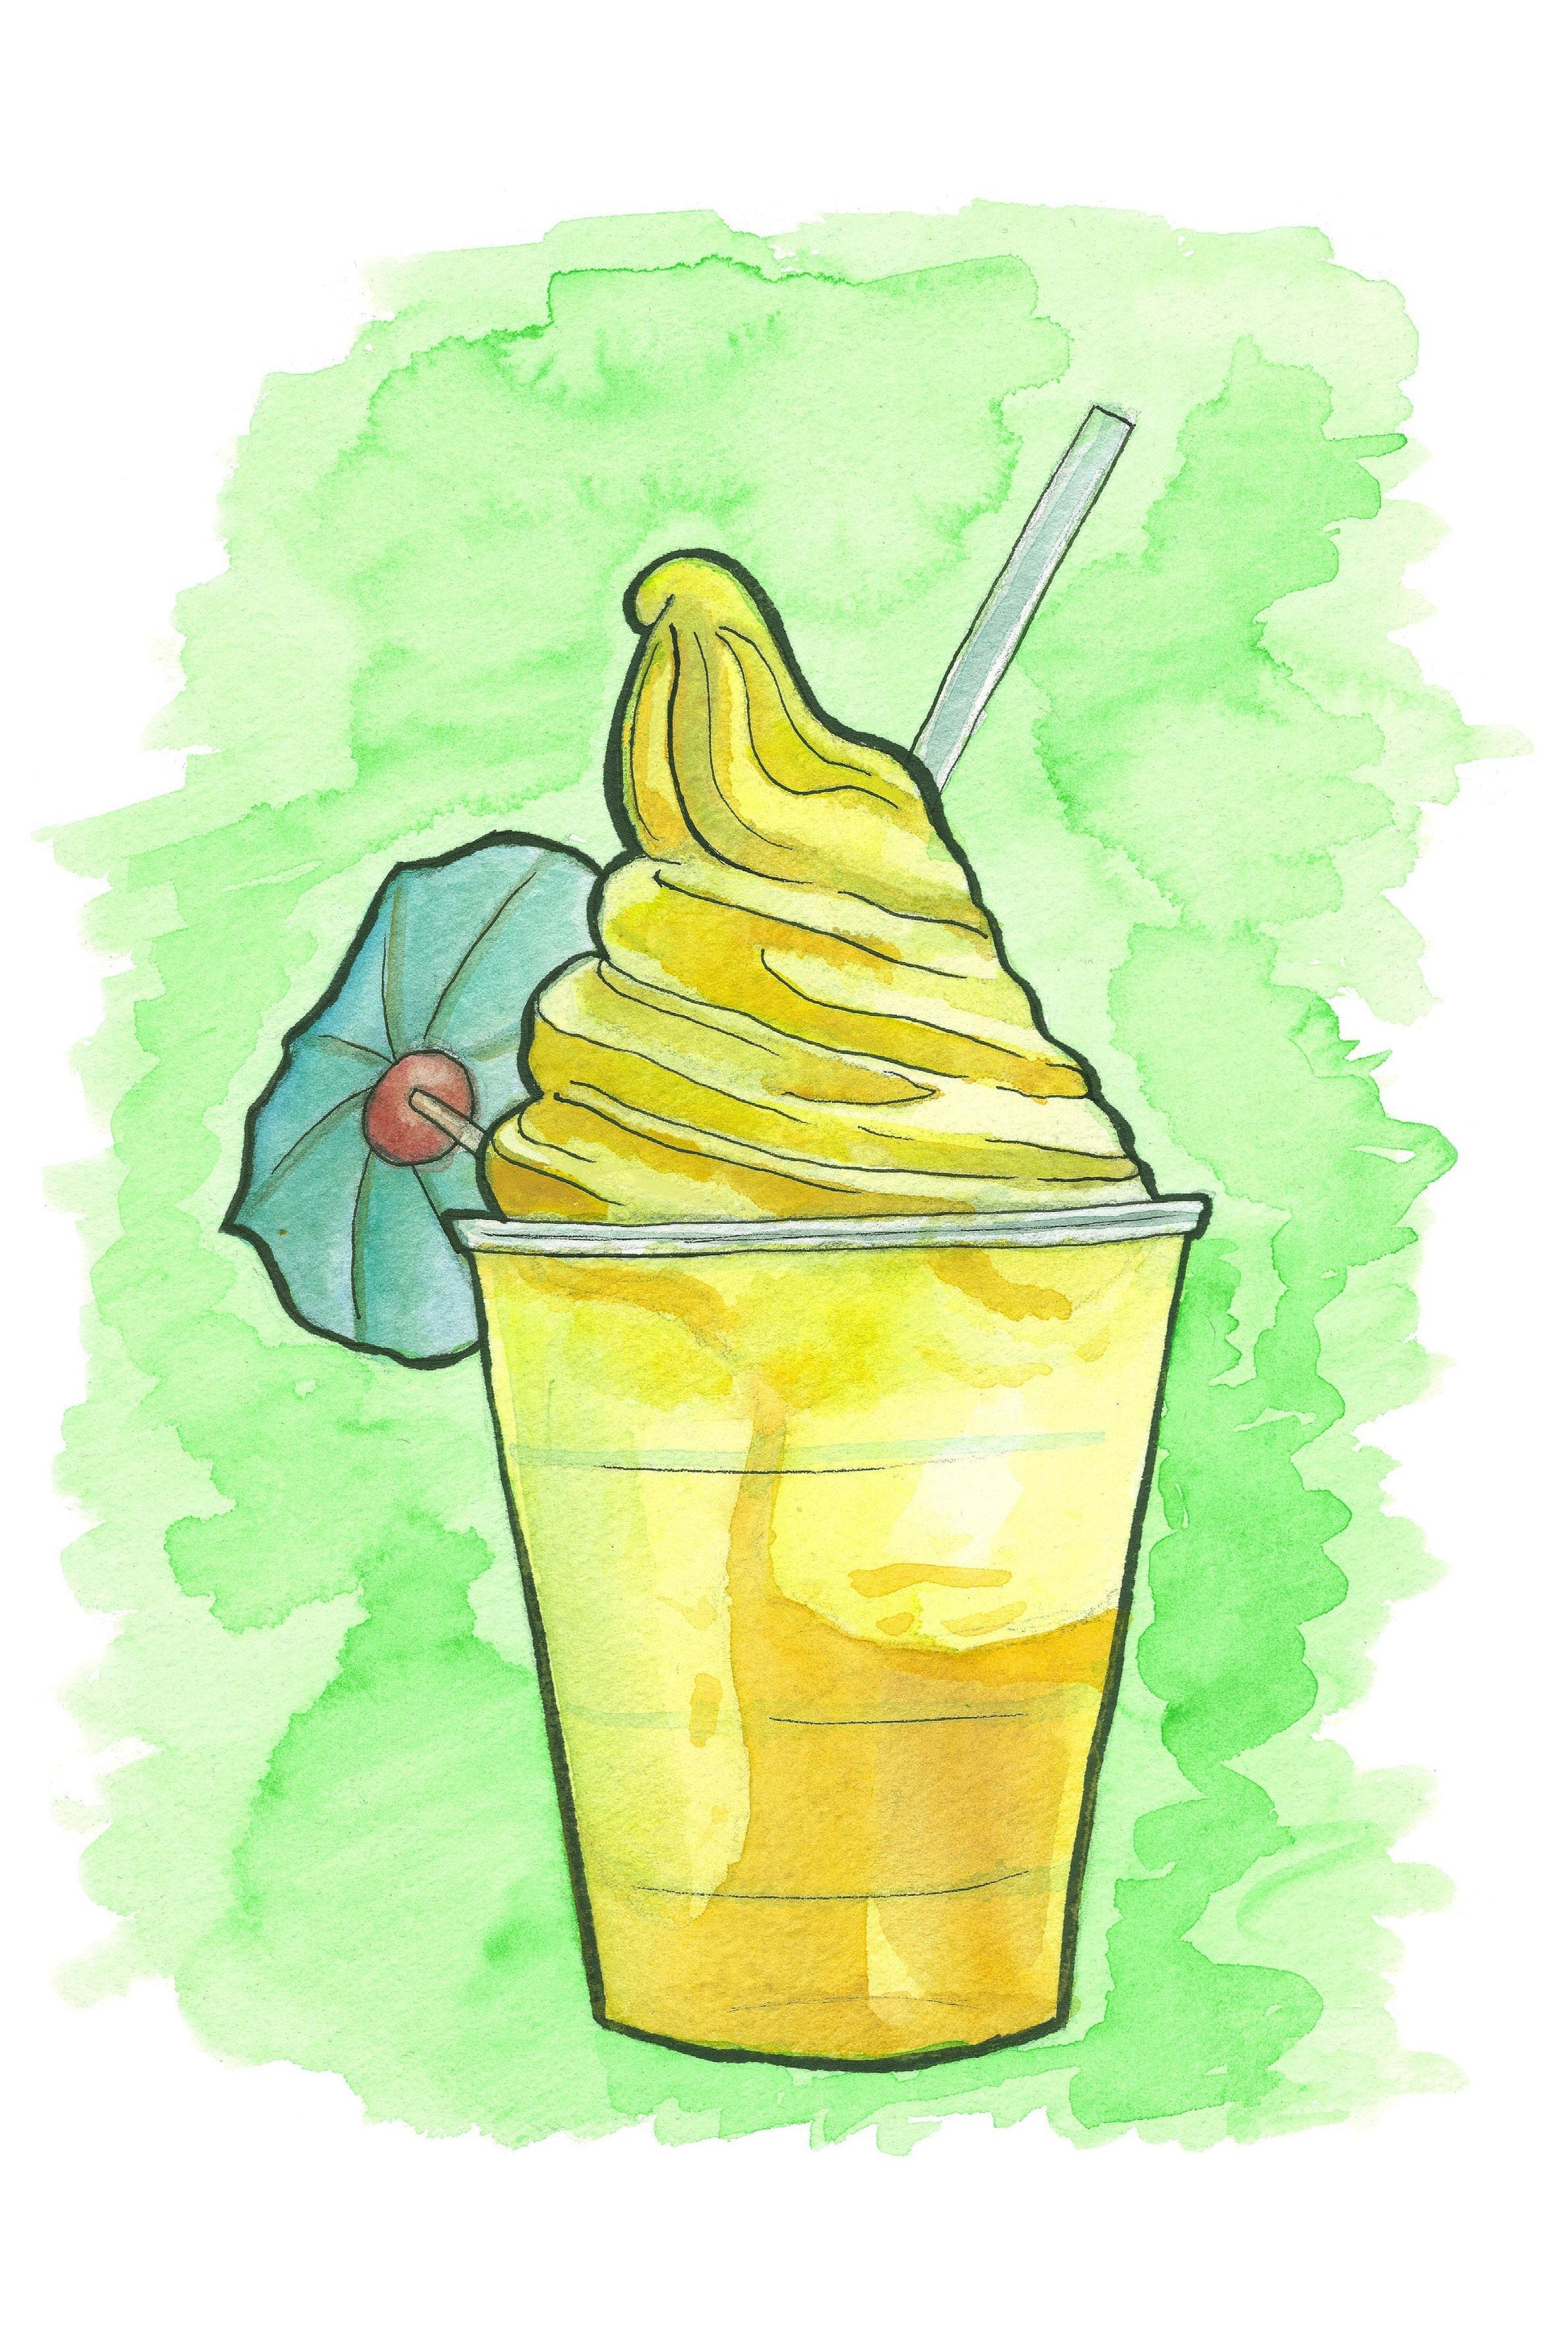 Pineapple Whip Ice Cream Dessert Food Illustration - Watercolor Print 8x10.